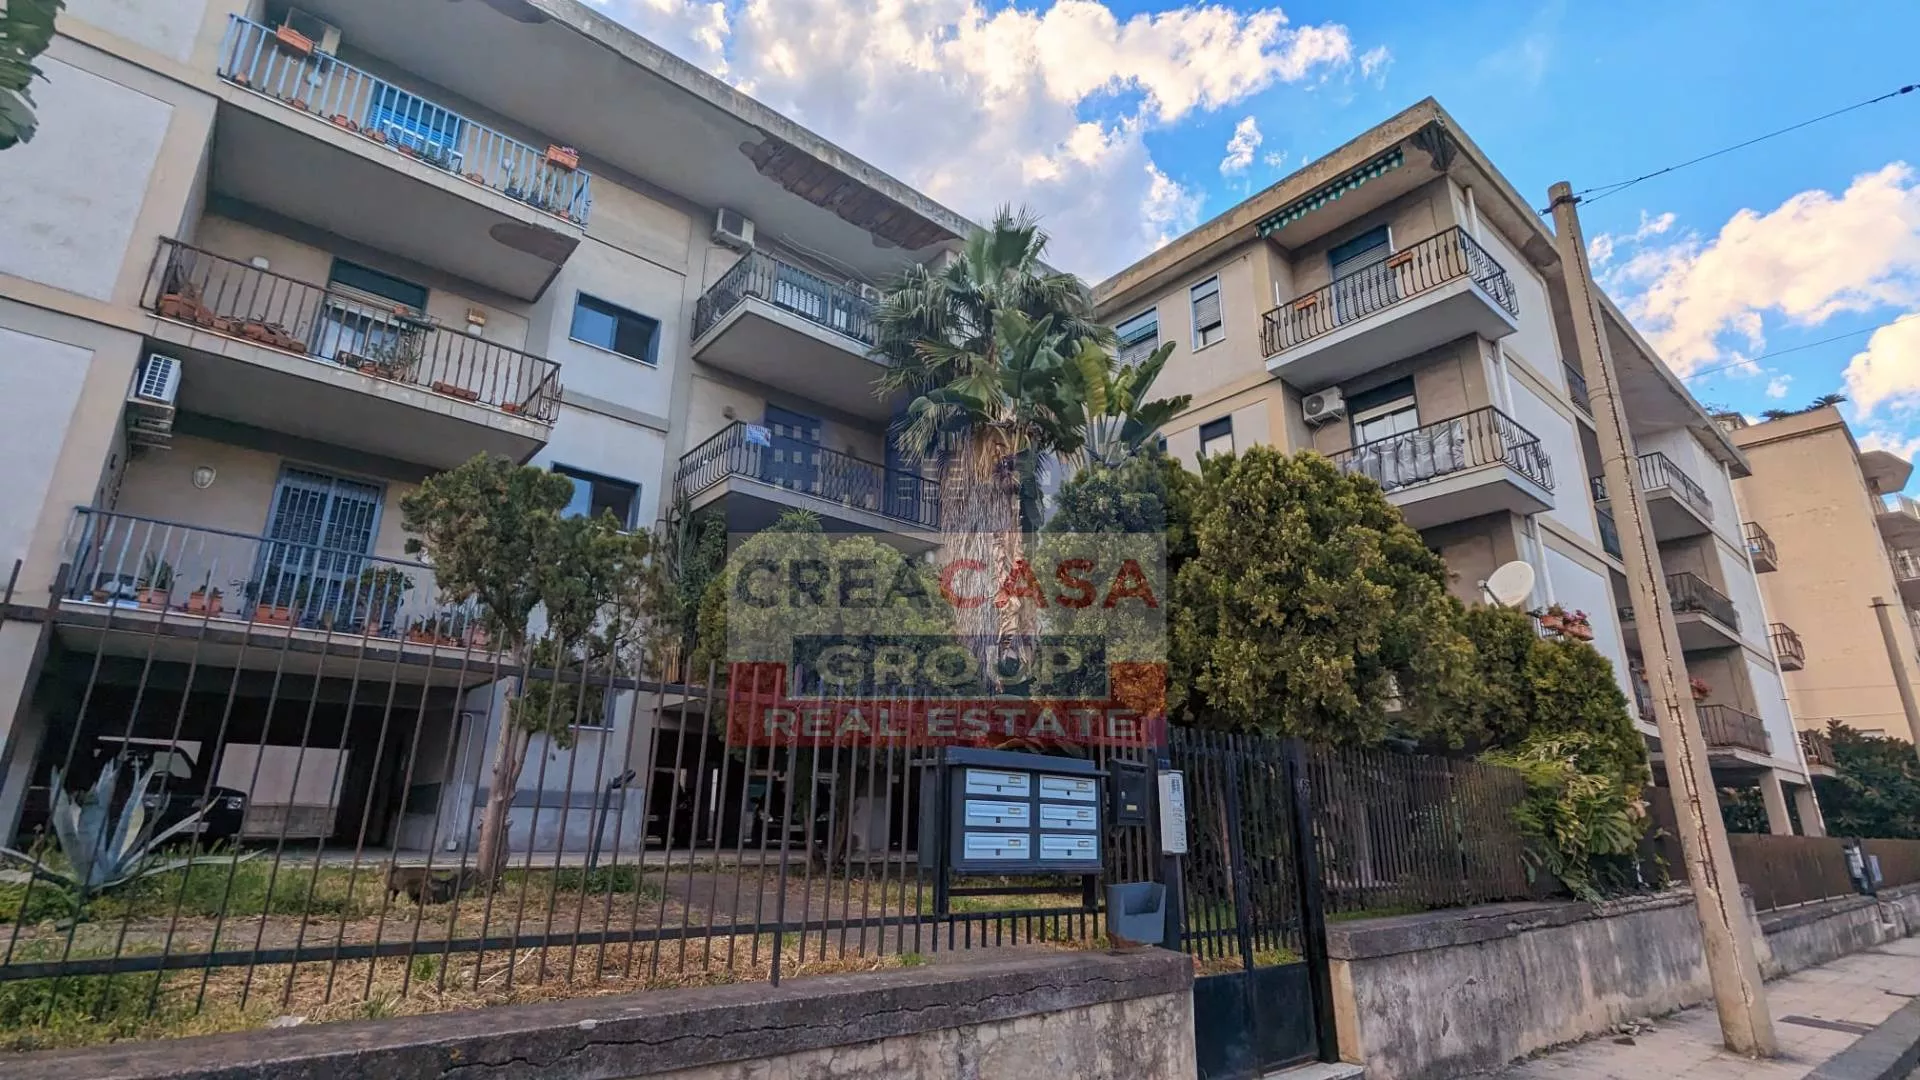 Immagine per Appartamento in vendita a Giarre via Fratelli Cairoli